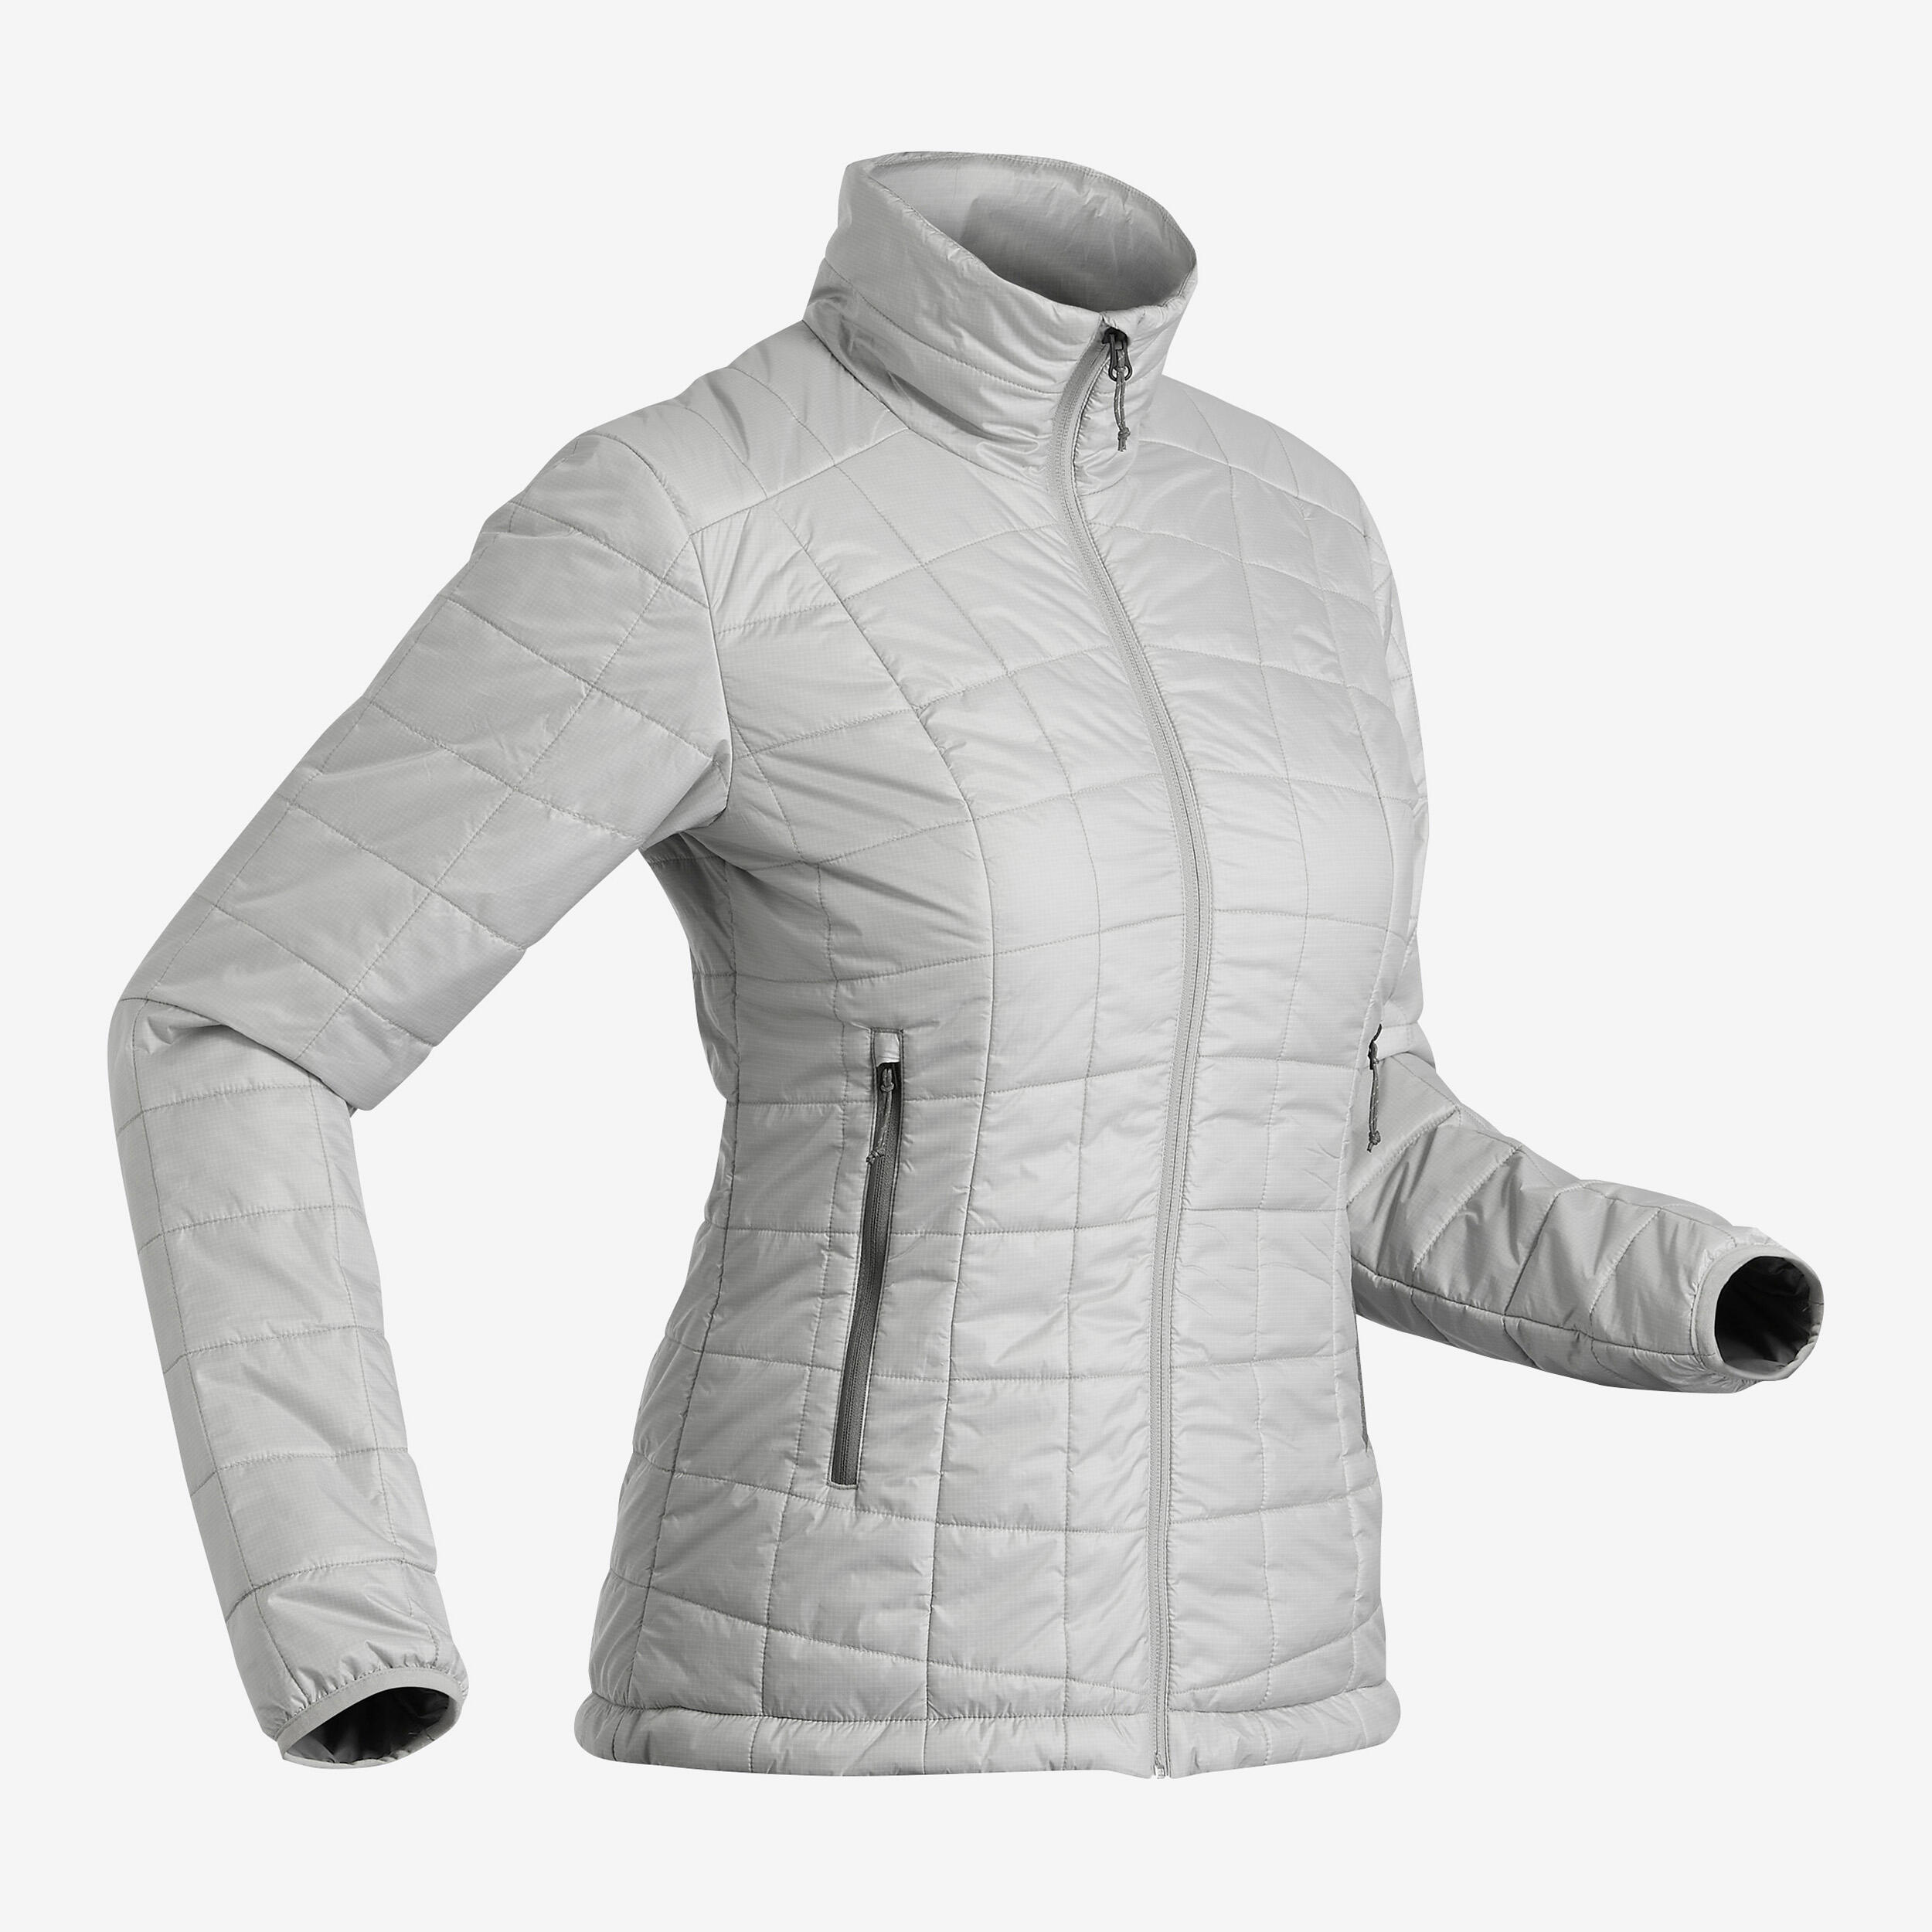 decathlon lightweight jacket